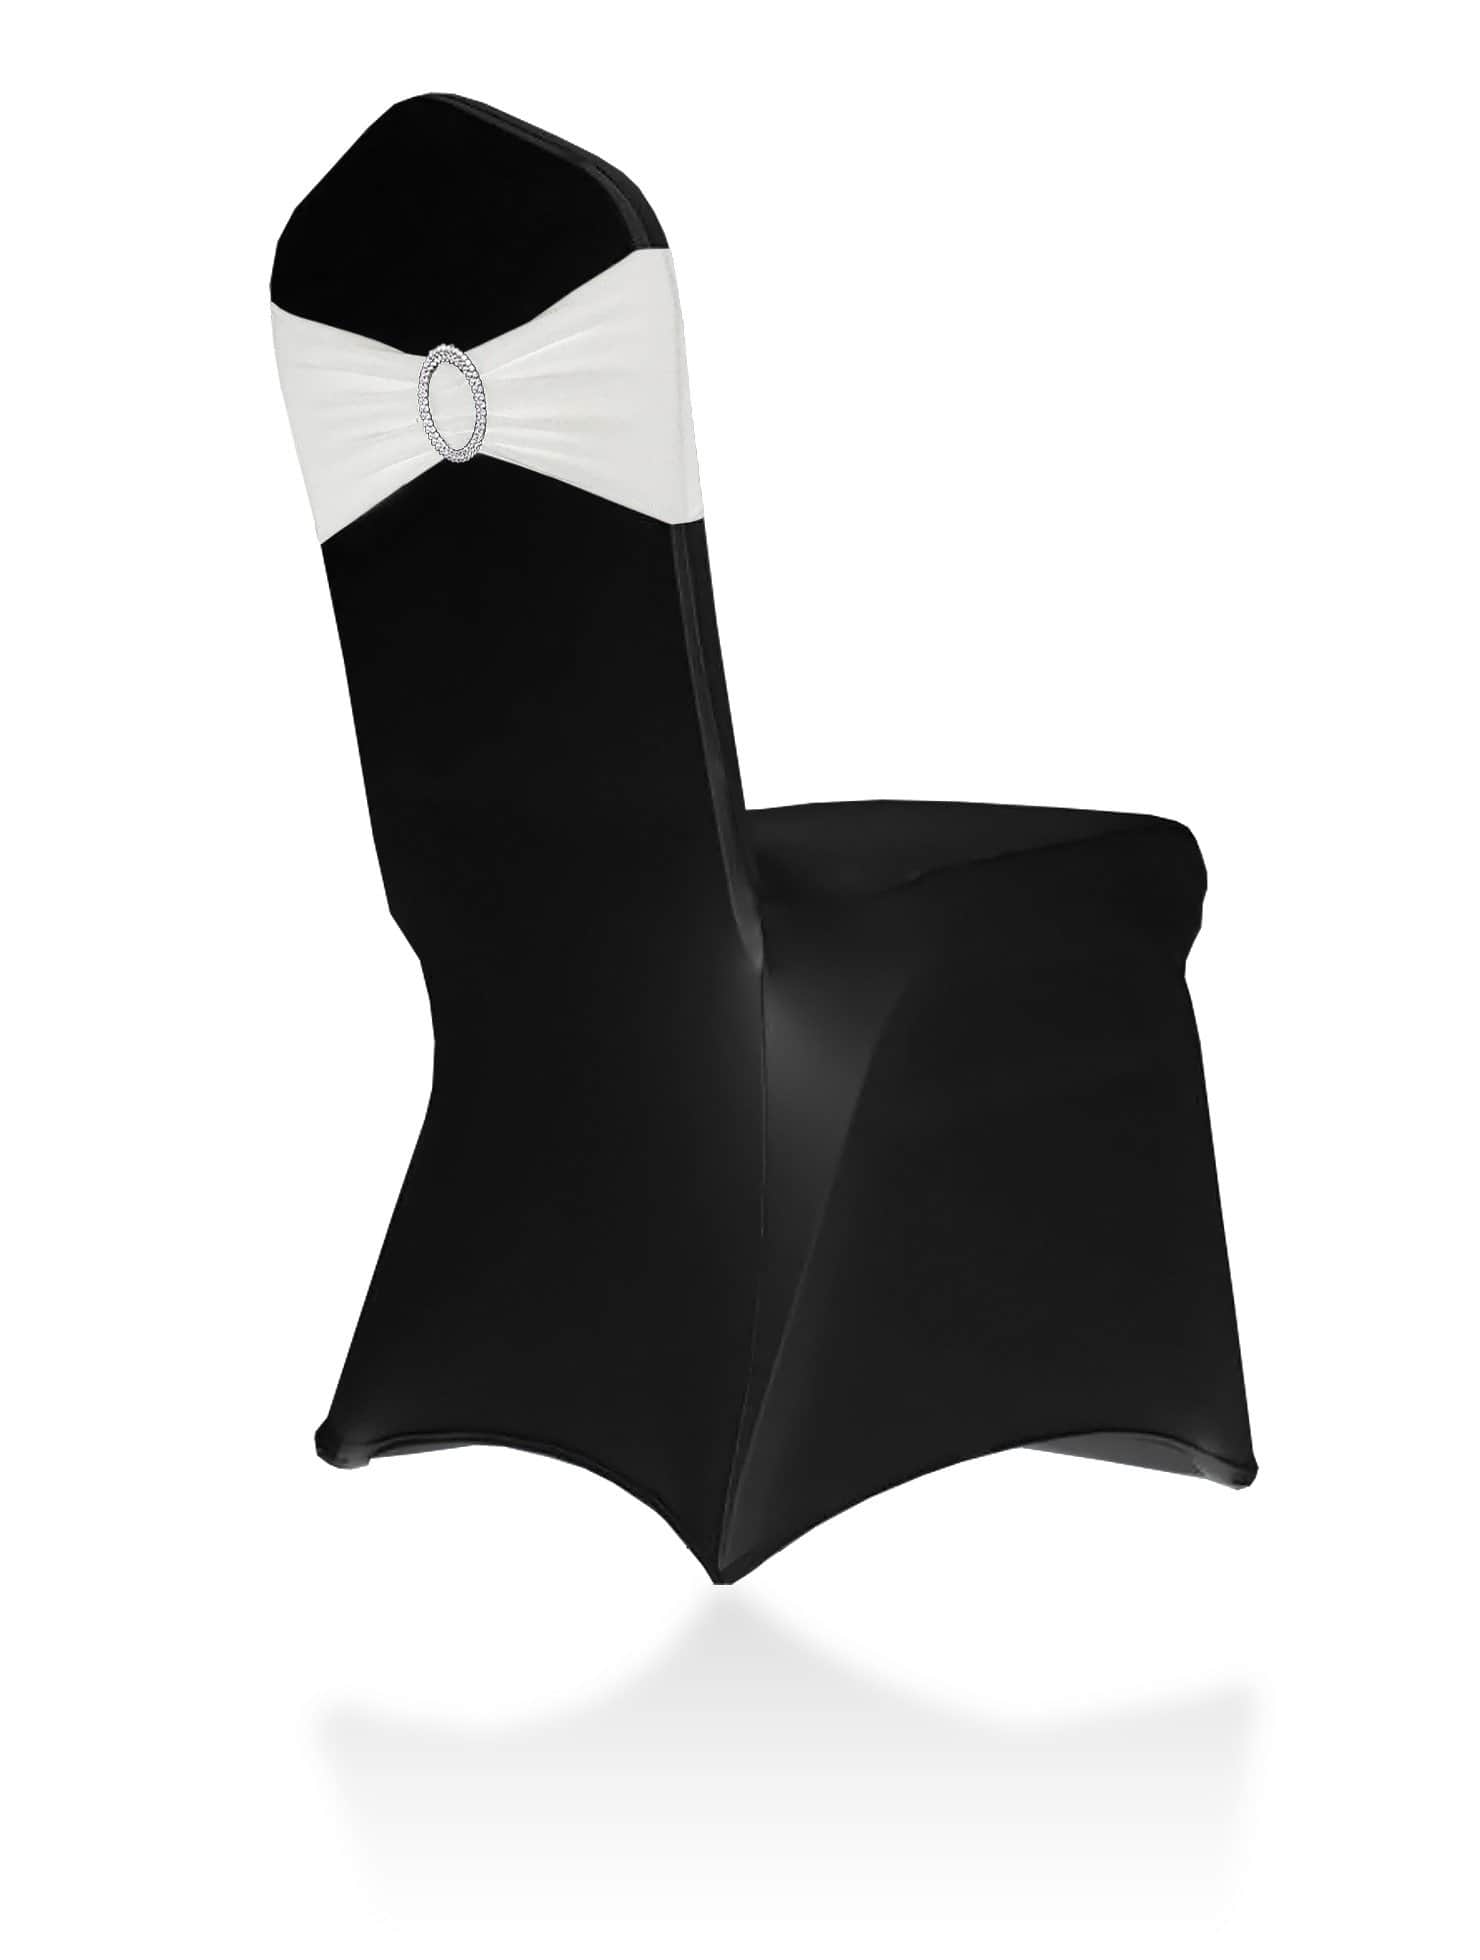 Rent White Spandex Folding Chair Cover Sash! (Ship in Bulk Nationwide)